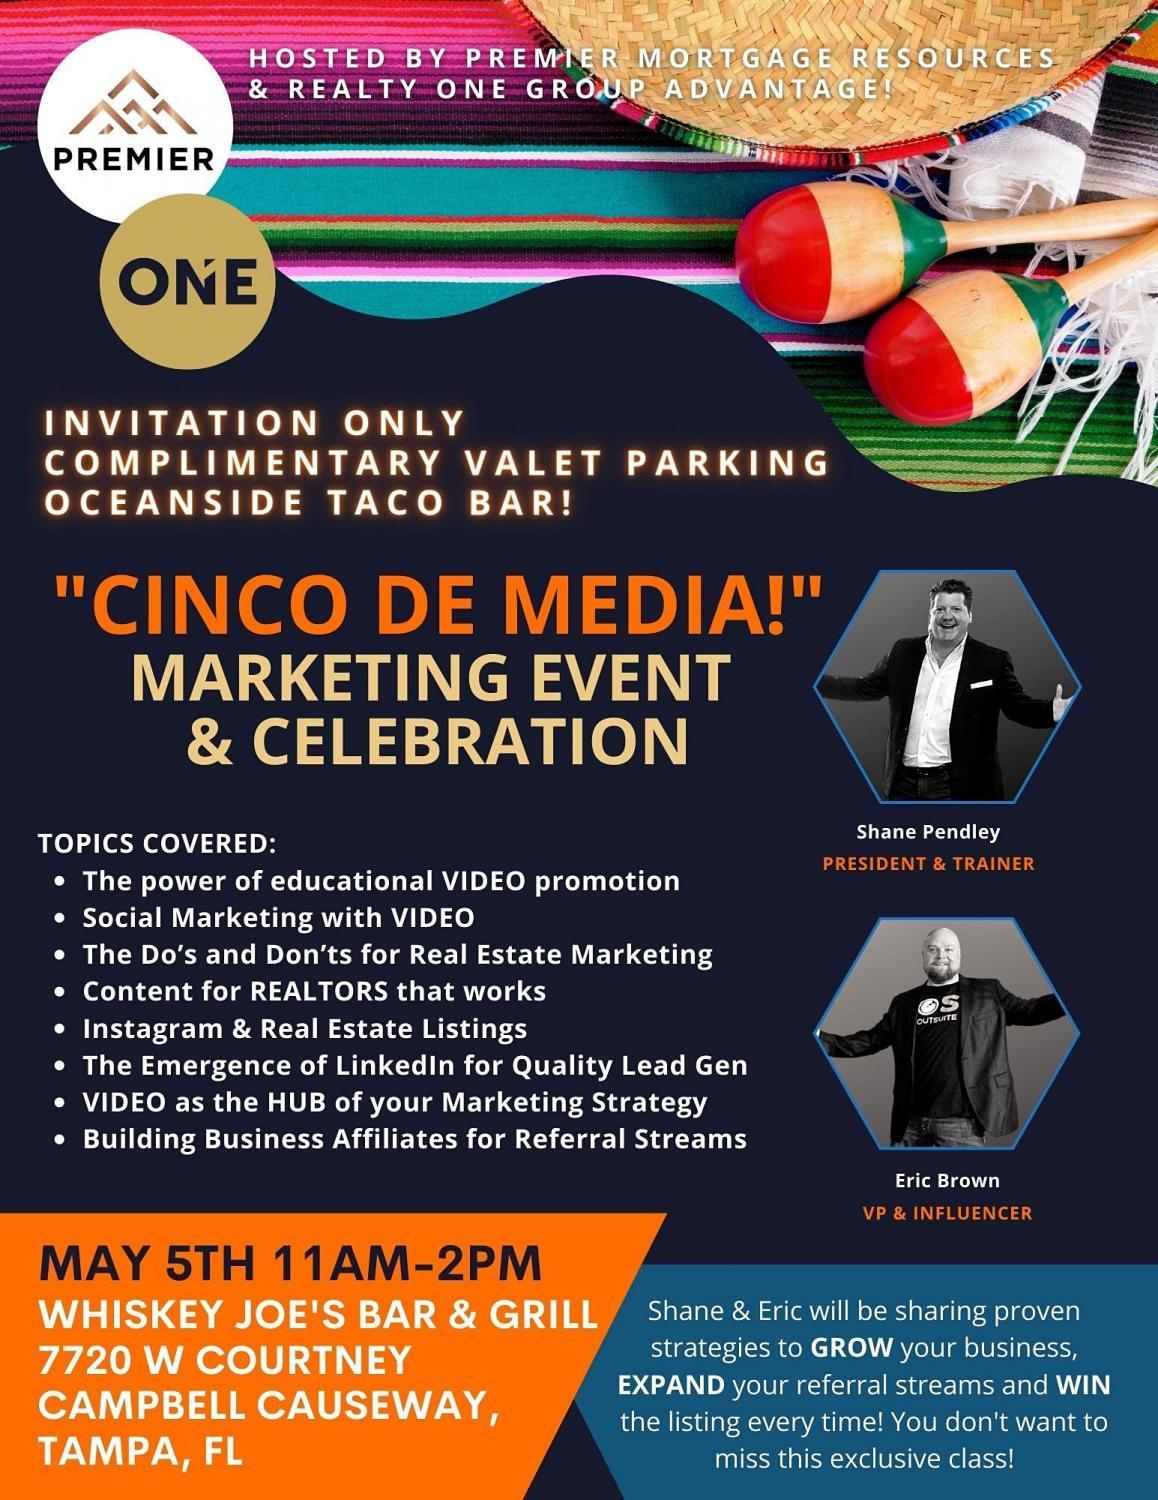 'Cinco de Media!' Marketing Event & Celebration at Whiskey Joe's